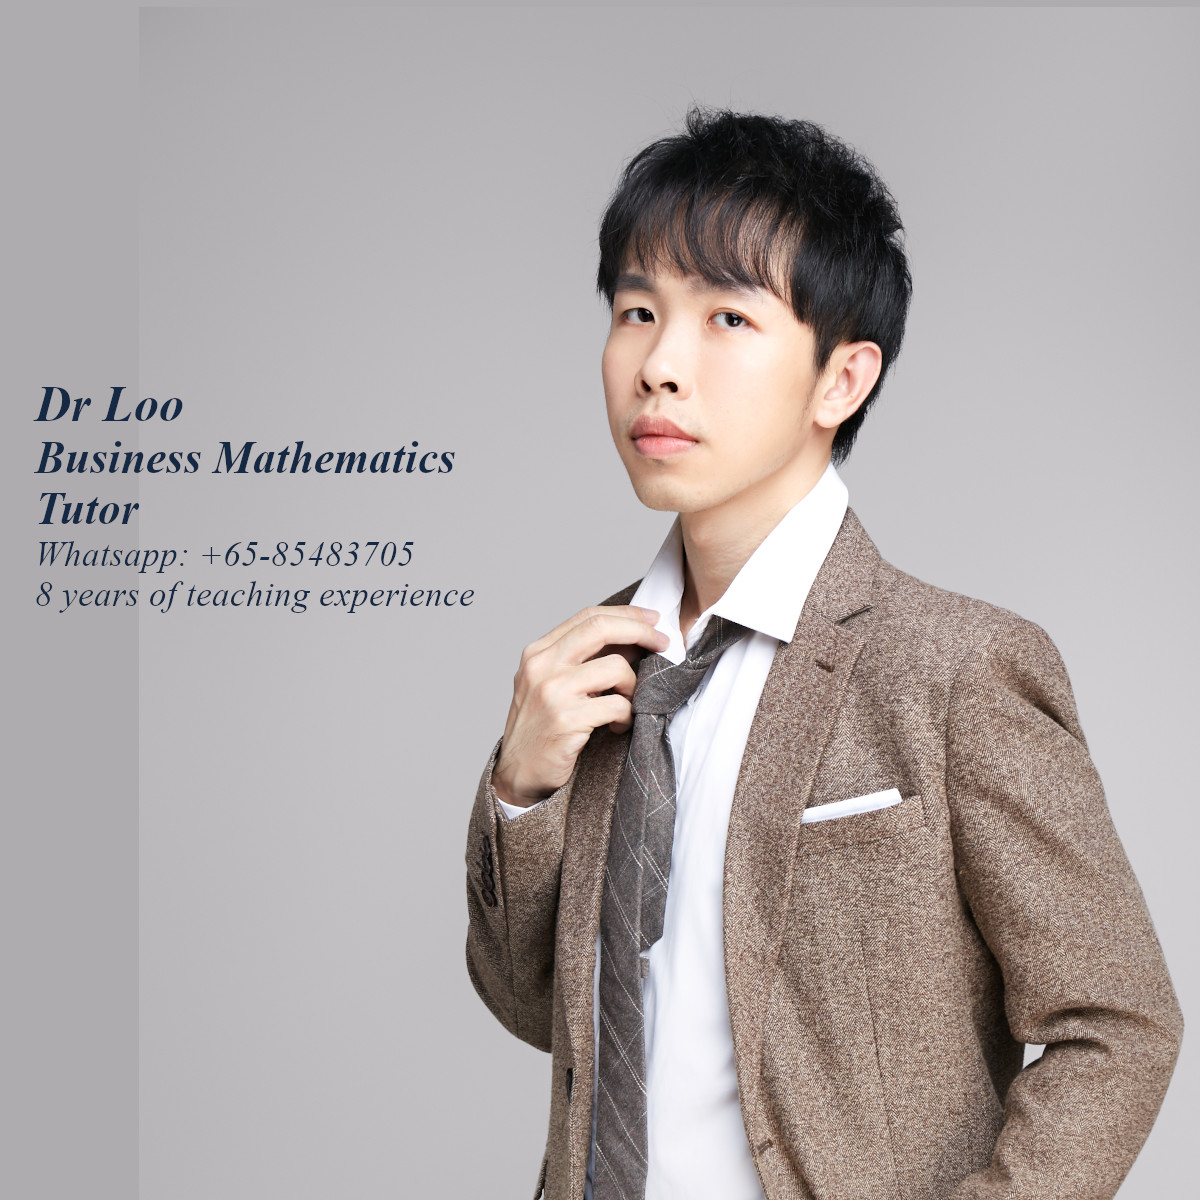 Business Mathematics Tutor in Singapore